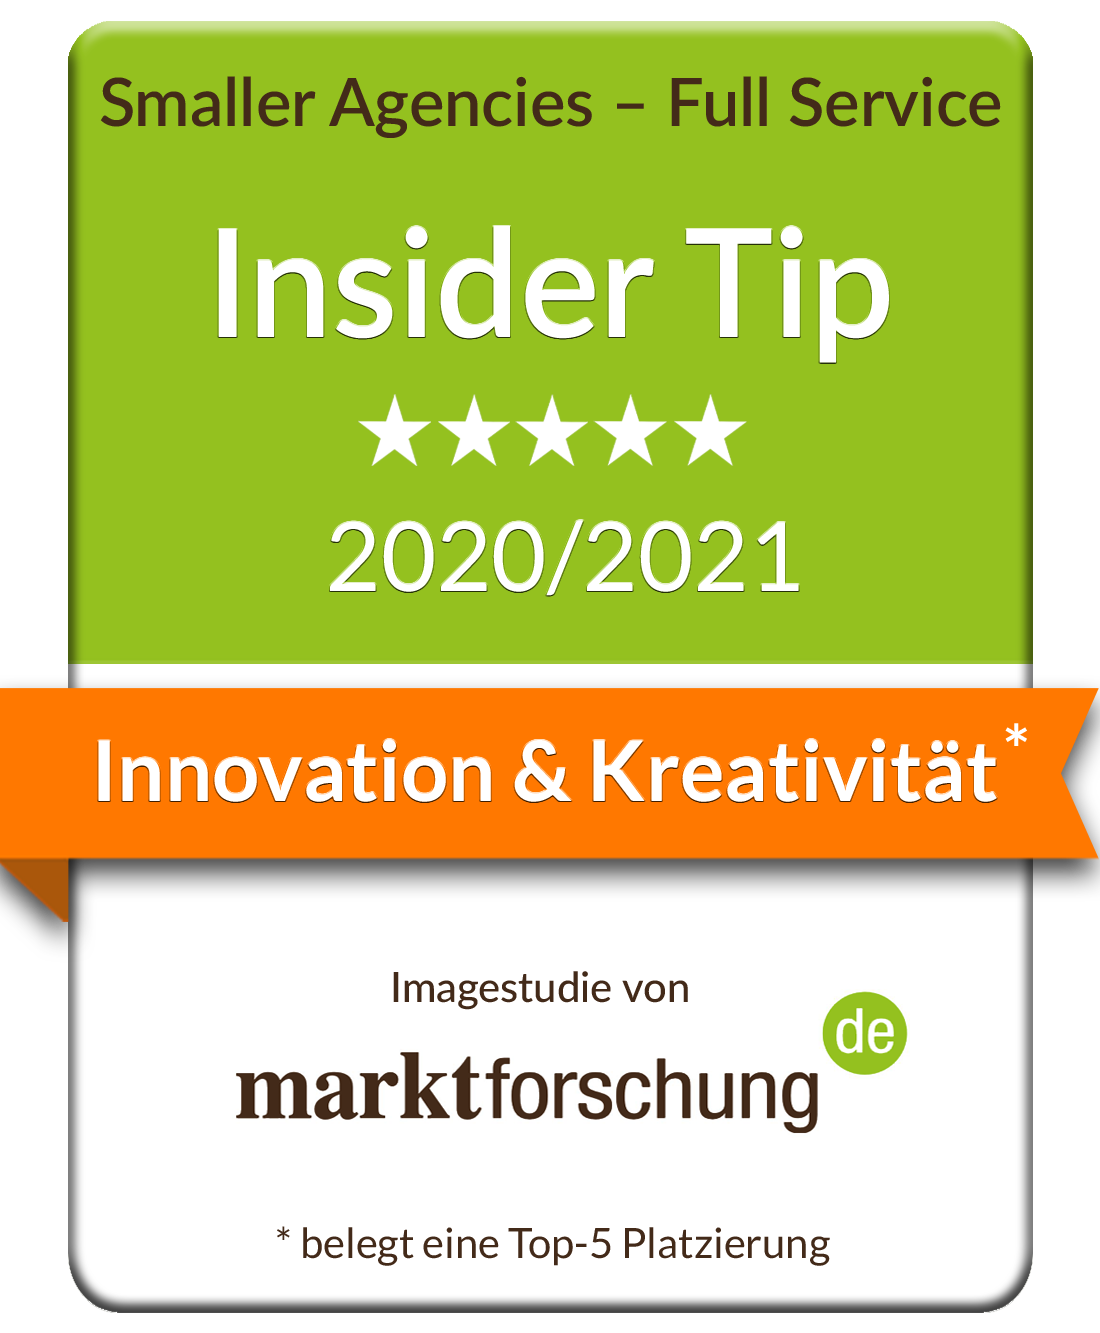 marktforschung.de Innovation & Kreativität